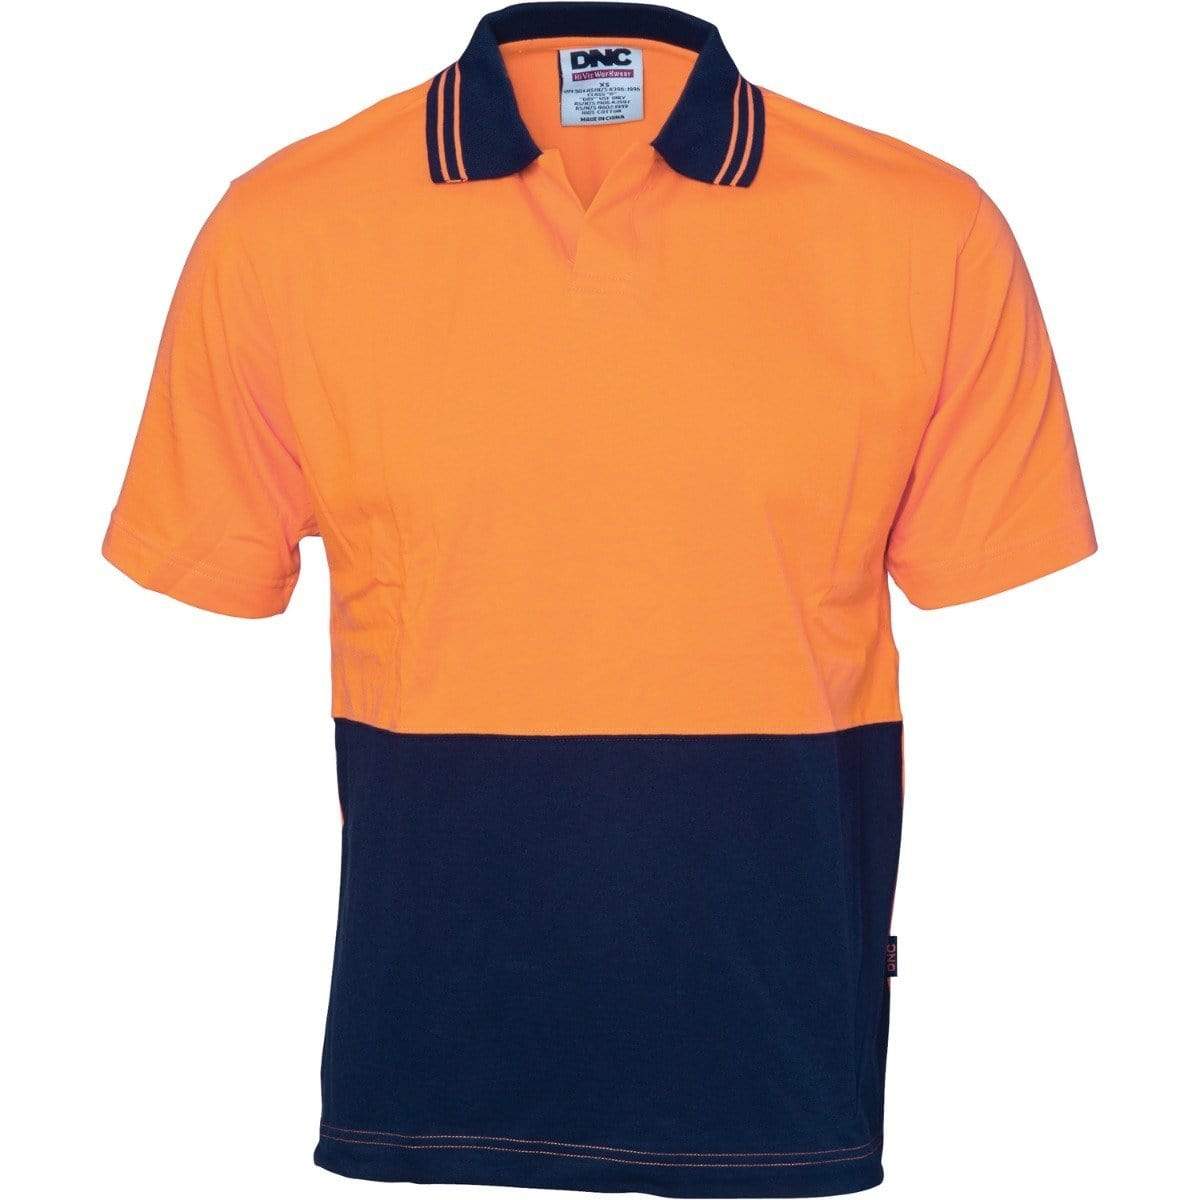 Dnc Workwear Hi-vis Cool Breeze Cotton Jersey Food Industry Short Sleeve Polo - 3905 Work Wear DNC Workwear Orange/Navy XS 